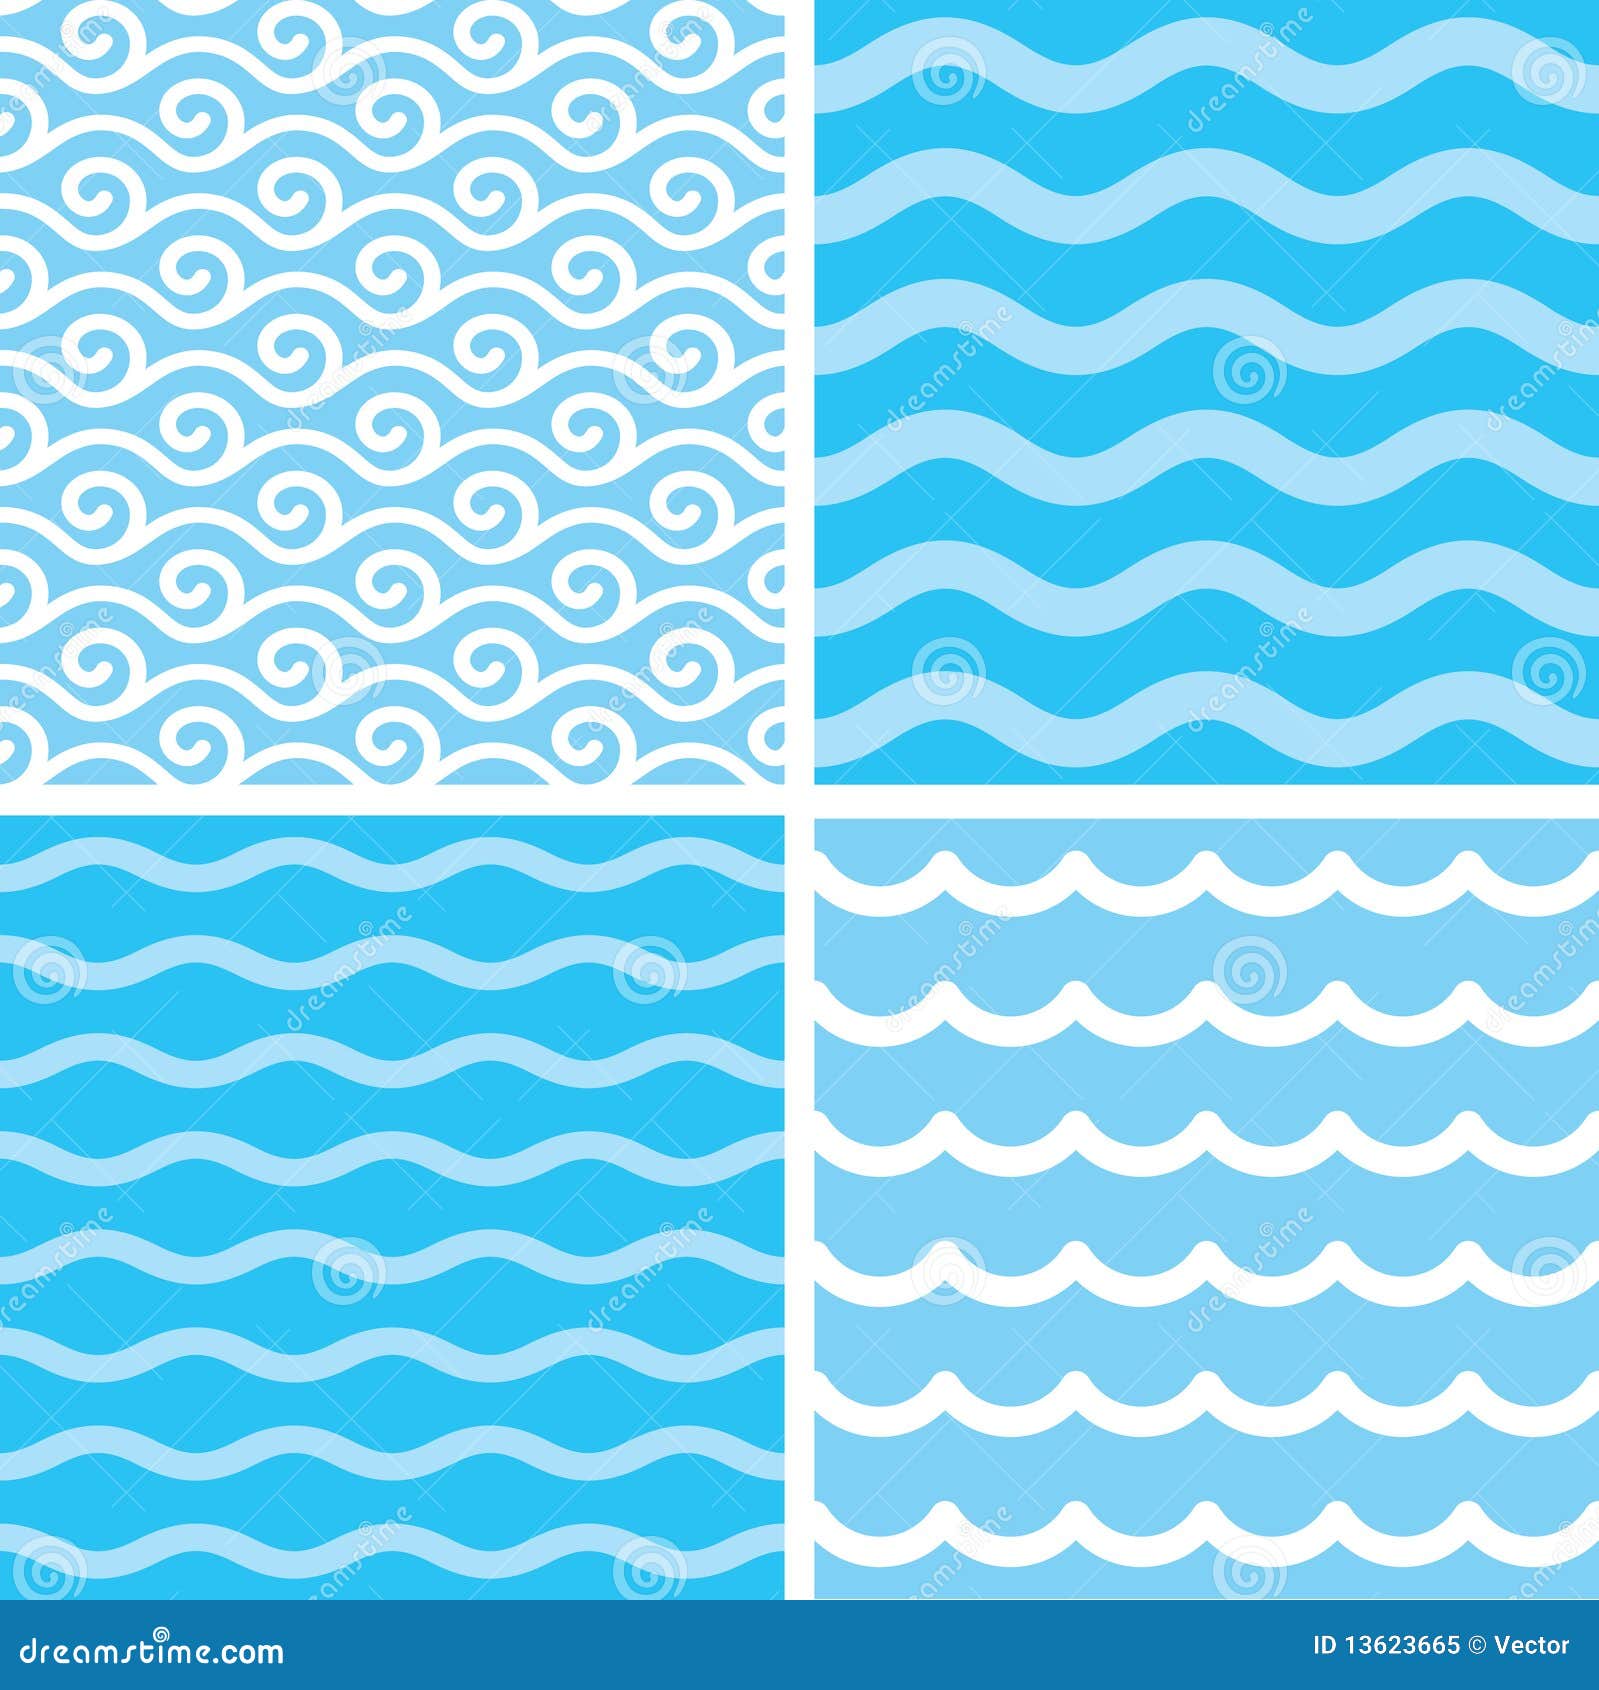 seamless wave patterns